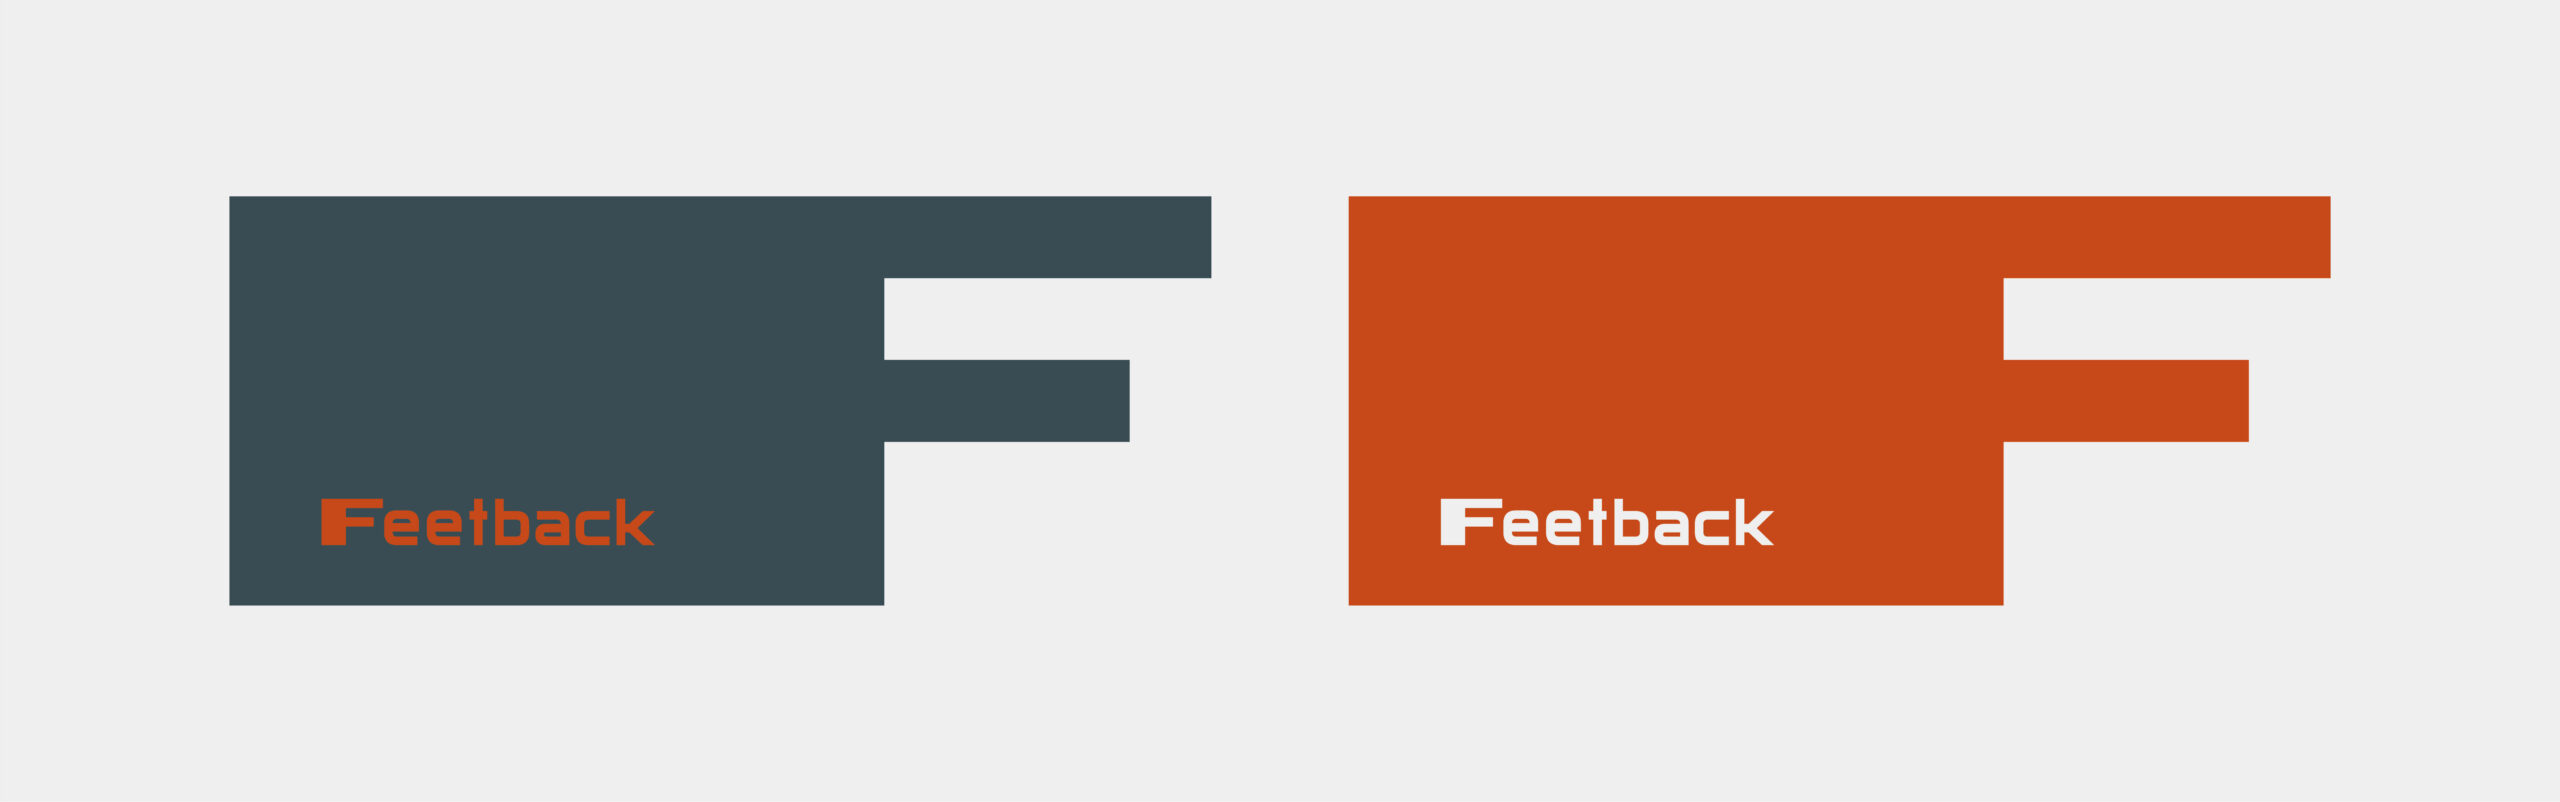 Логотип Feetback